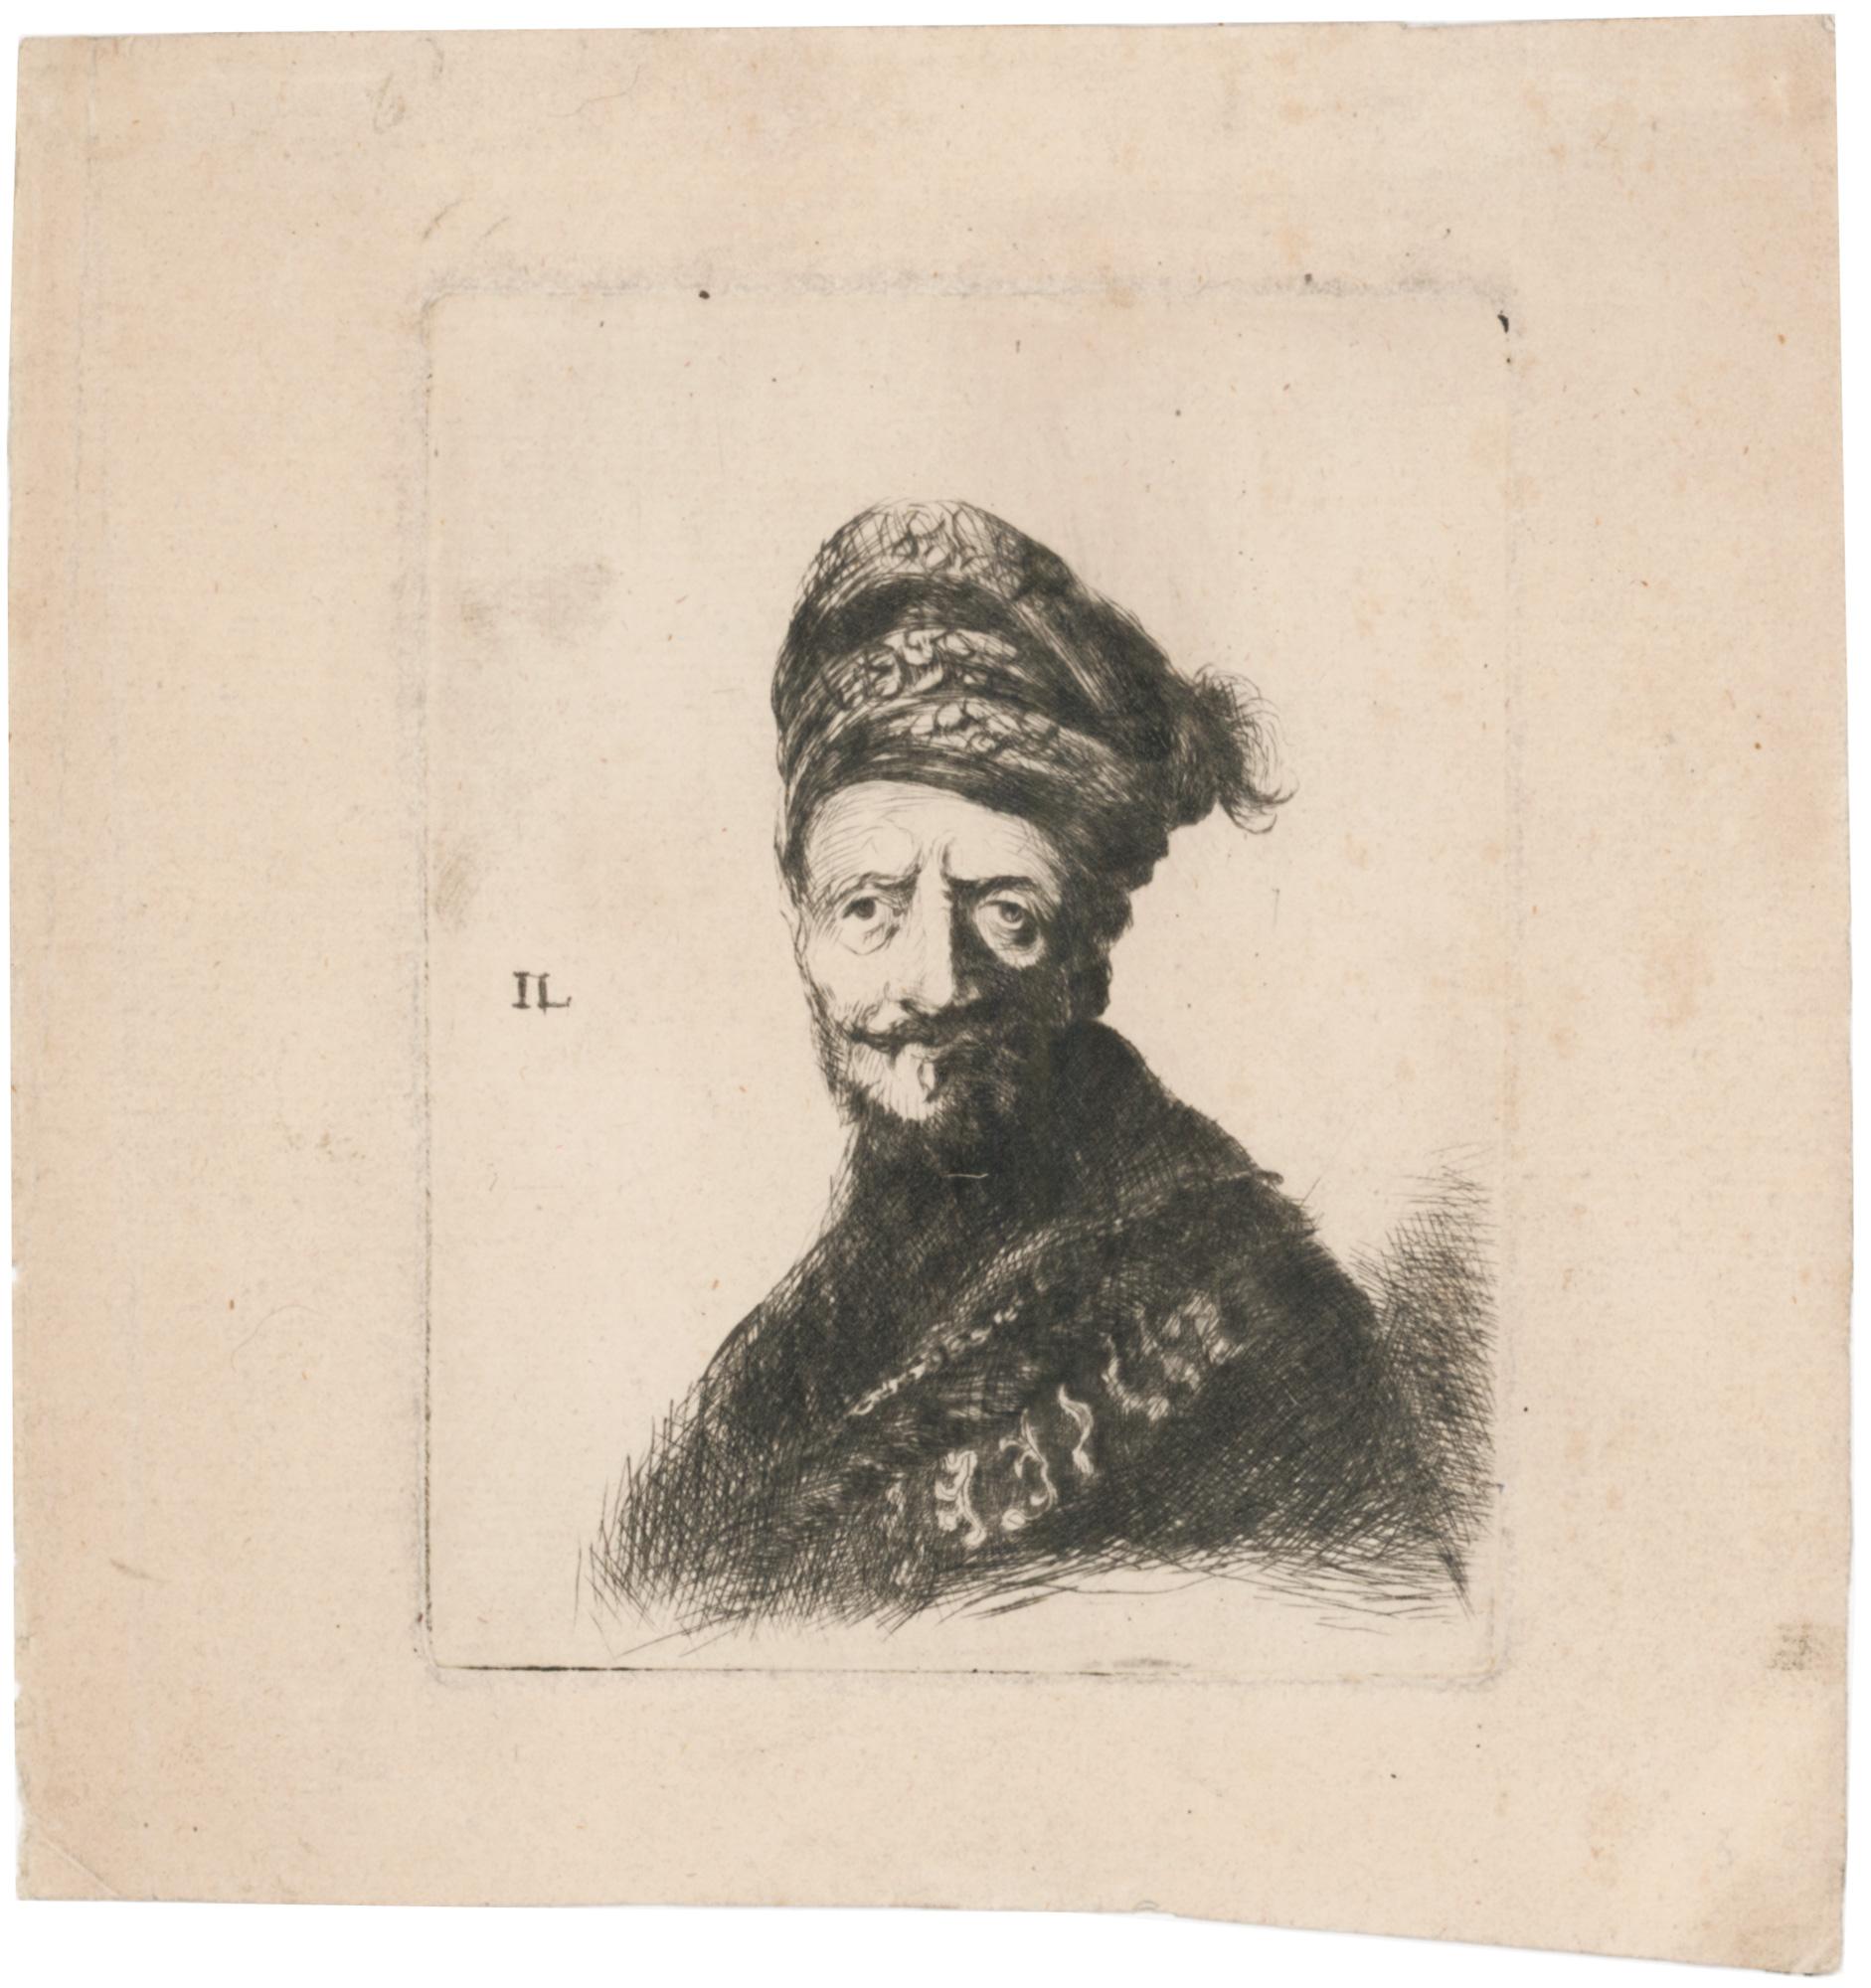 Bearded man in turban and fur - Print by Rembrandt van Rijn